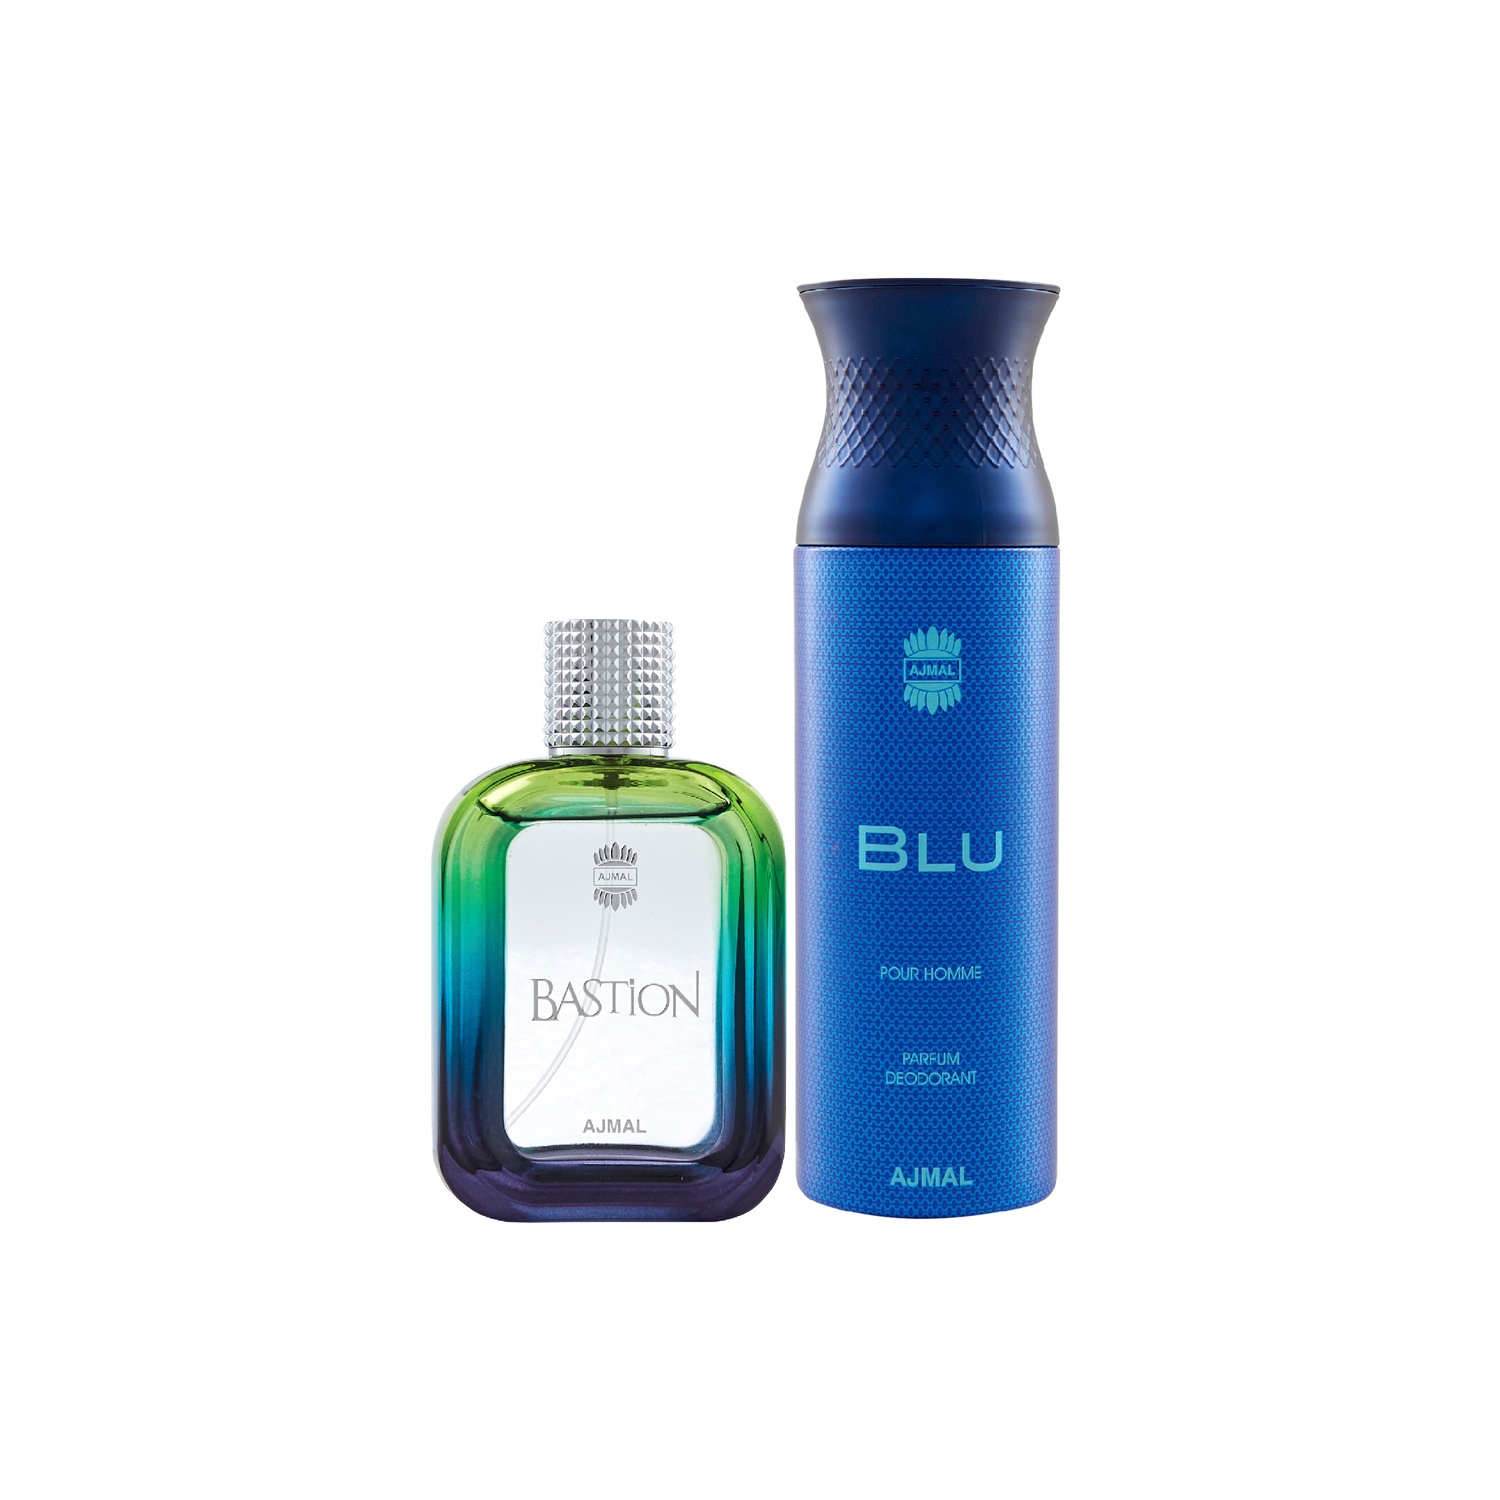 Ajmal | Ajmal  Bastion EDP Woody Aromatic Perfume 100ml for Men and Blu Homme Deodorant Aquatic Woody Fragrance 200ml for Men+ 2 Parfum Testers FREE